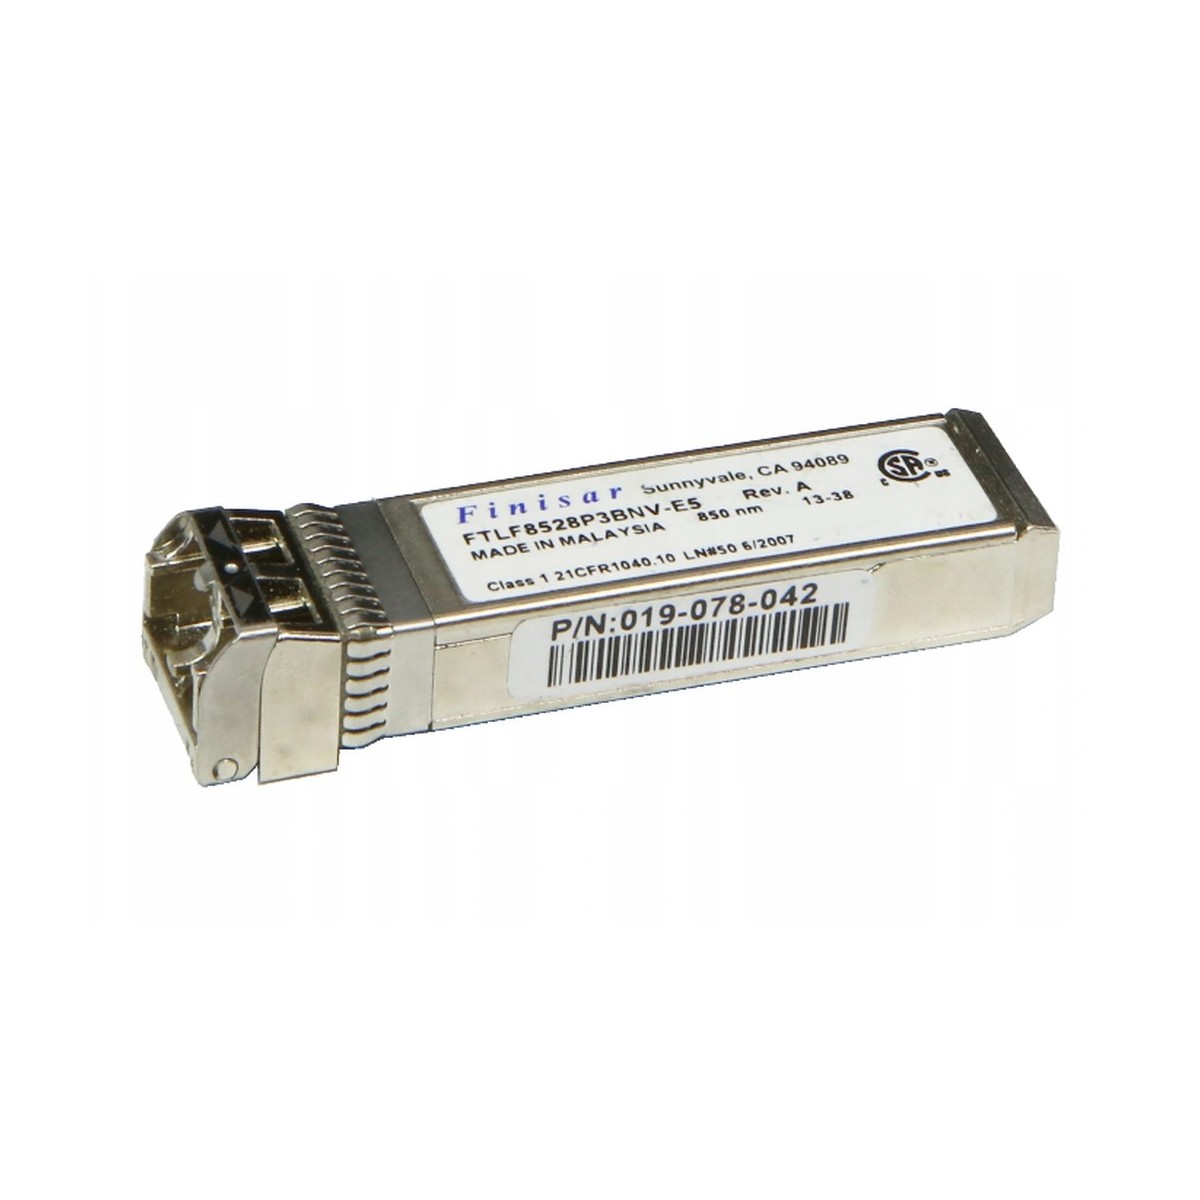 GBIC EMC FINISAR 8GB SFP+ 850NM FTLF8528P3BNV-E5